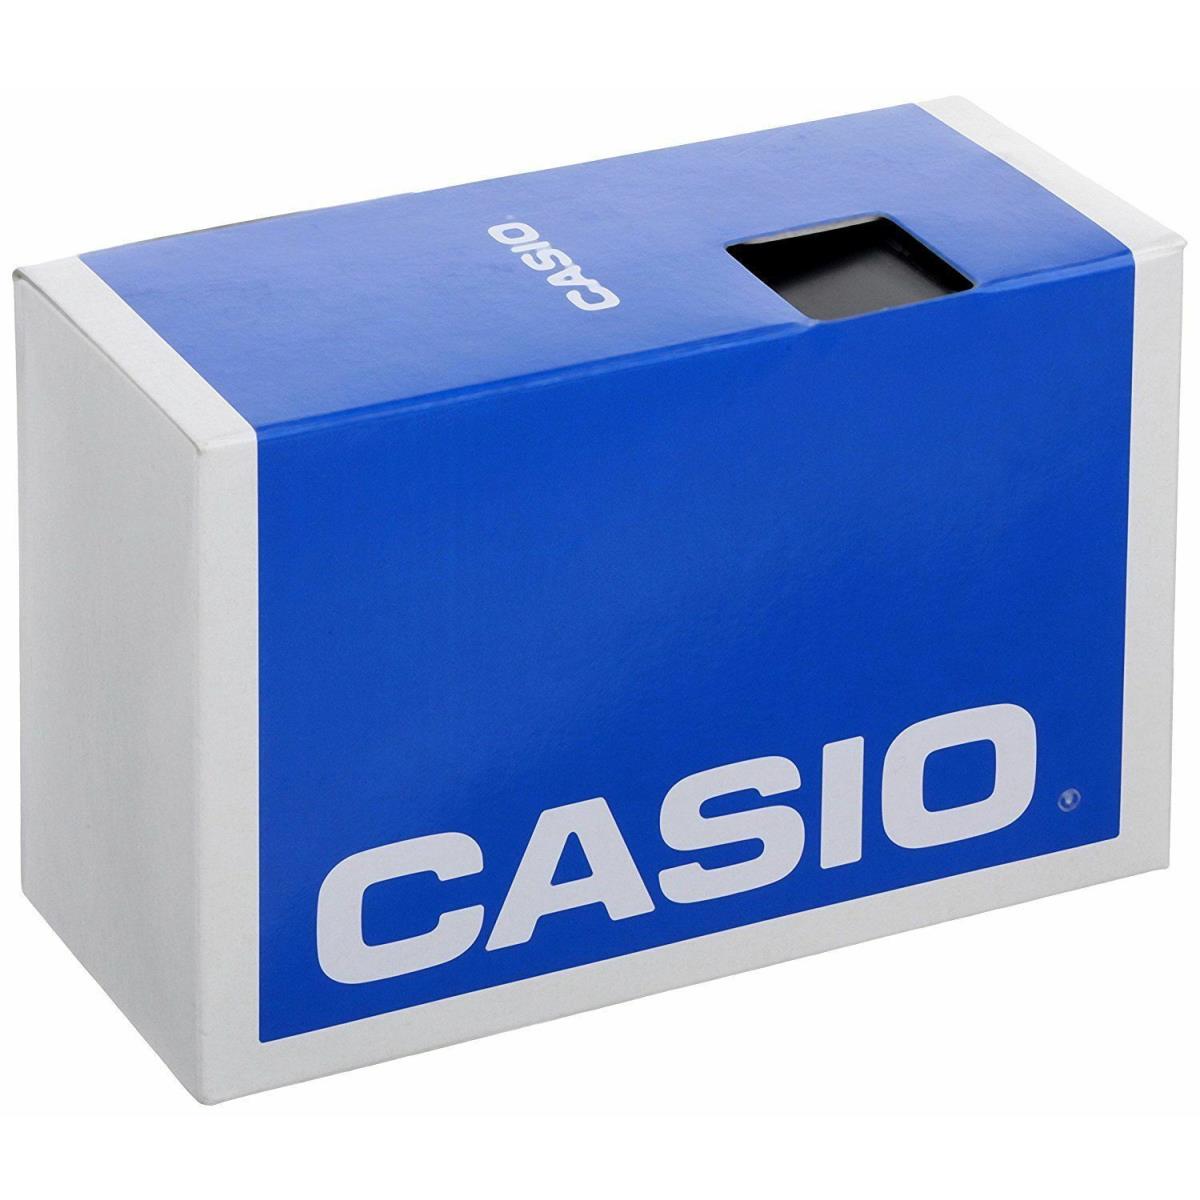 Casio G-shock Men`s Quartz Illuminator Blue Resin 43mm Digital Watch DW9052-2V